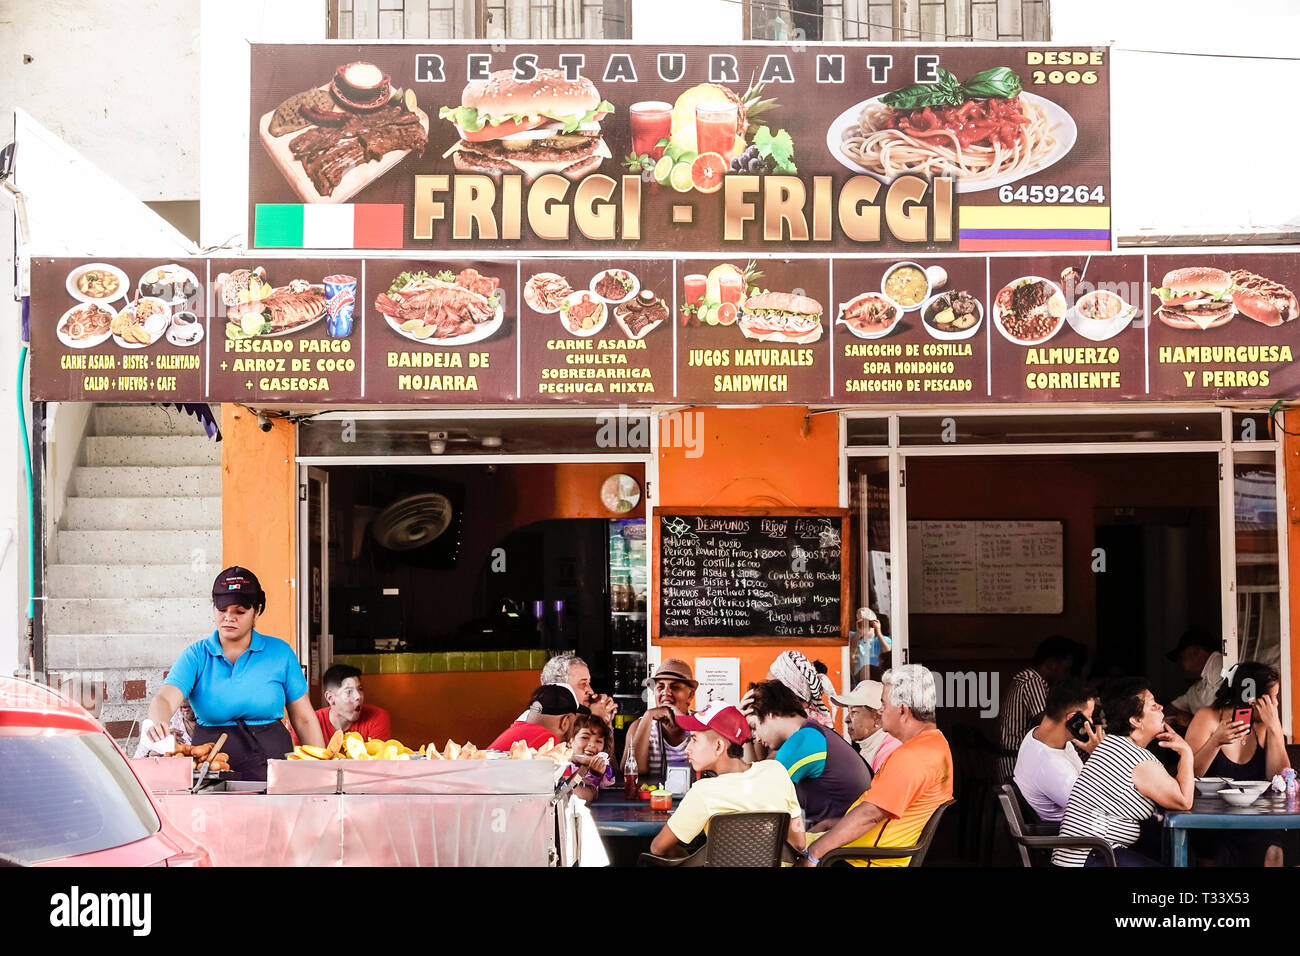 Cartagena Colombia,Bocagrande,Restaurante Friggi-Friggi,restaurant restaurants food dining cafe cafes,picture menu,rustic,dining,woman female women,wa Stock Photo